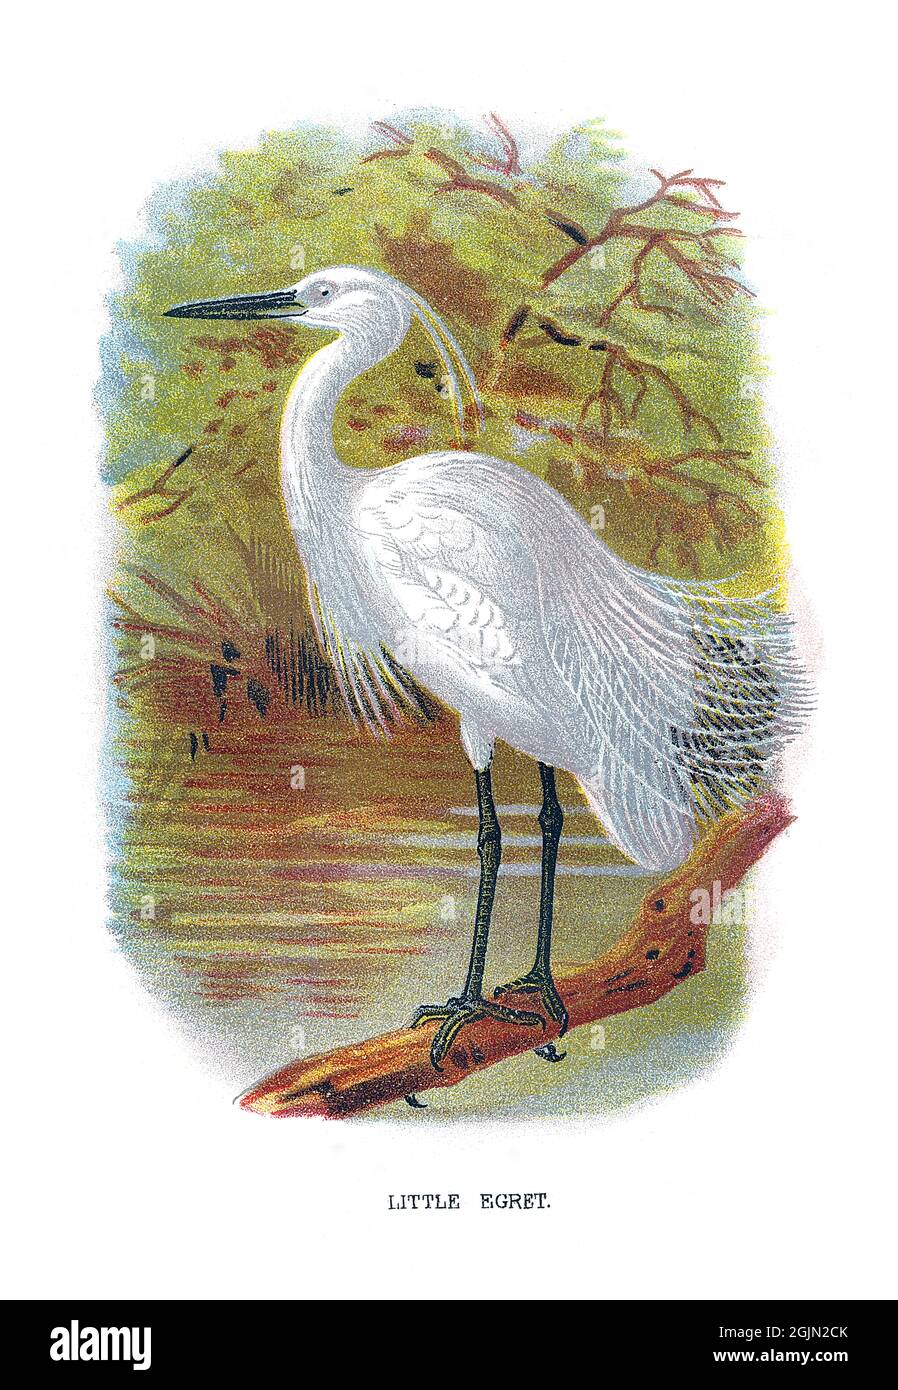 The little egret, Egretta garzetta, is a species of small heron in the family Ardeidae. Stock Photo